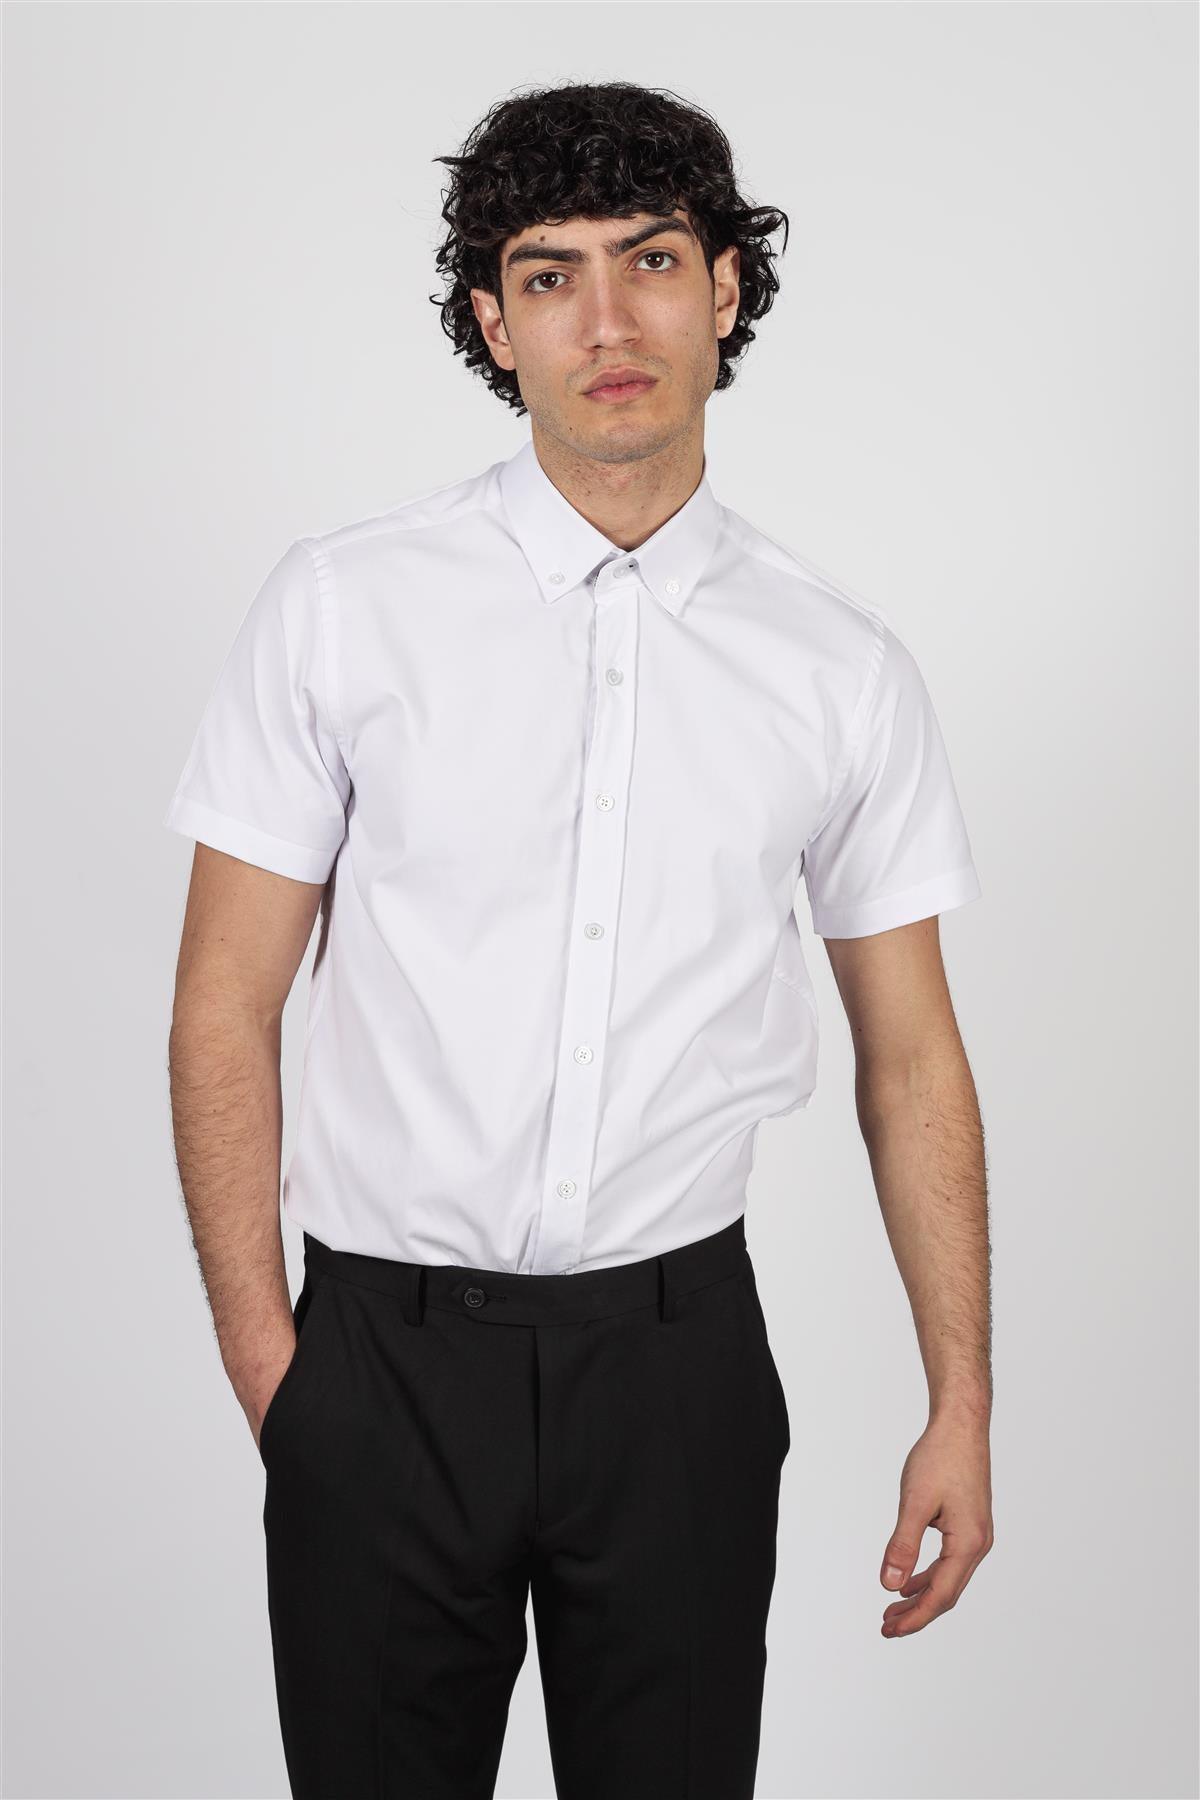 Vito white short sleeve shirt front